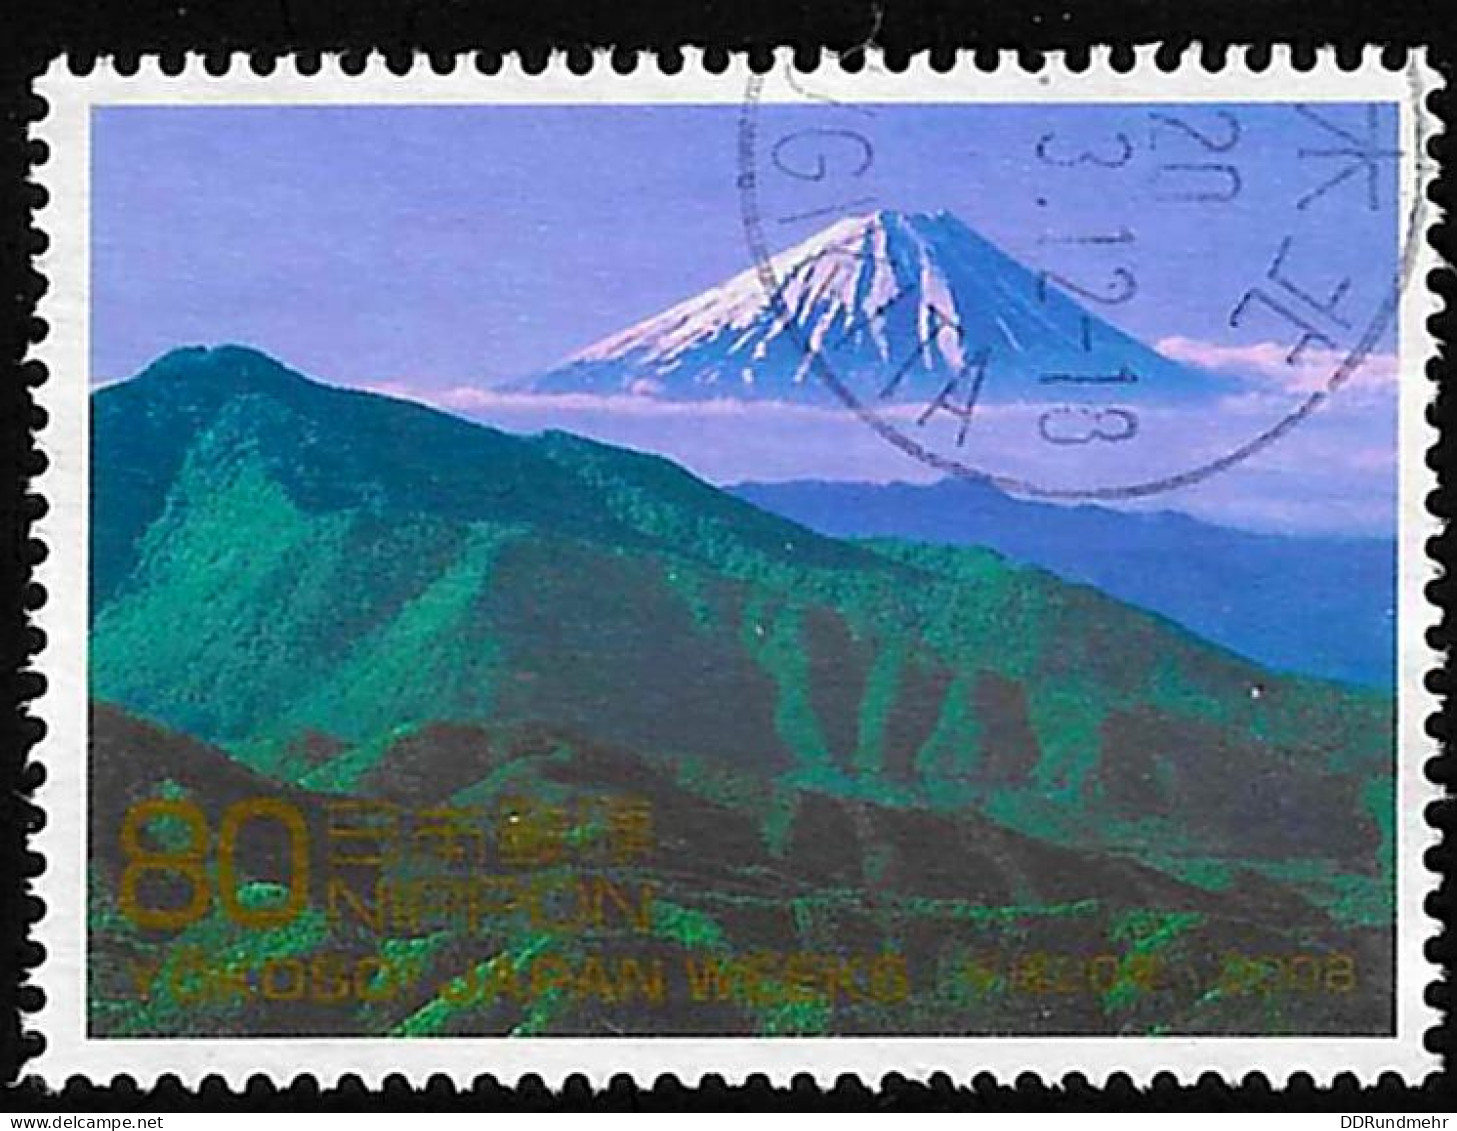 2008 Fuji   Michel JP 4447 Stamp Number JP 3014c Yvert Et Tellier JP 4274 Stanley Gibbons JP 3684 Used - Usados